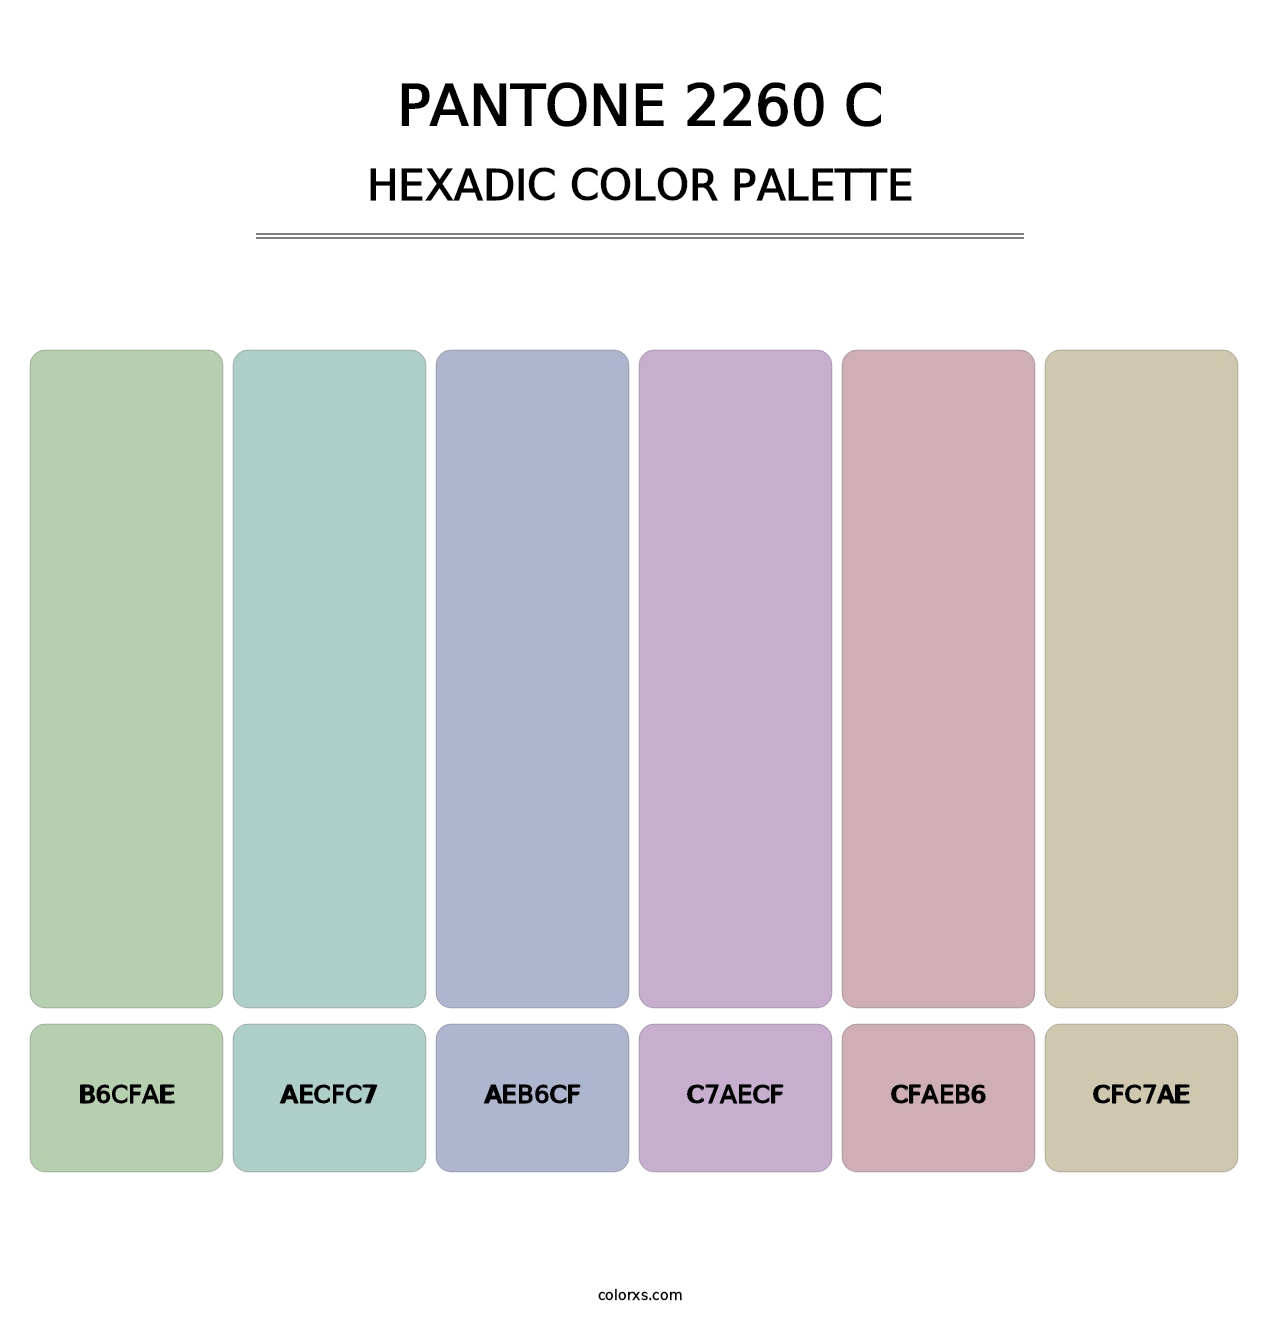 PANTONE 2260 C - Hexadic Color Palette